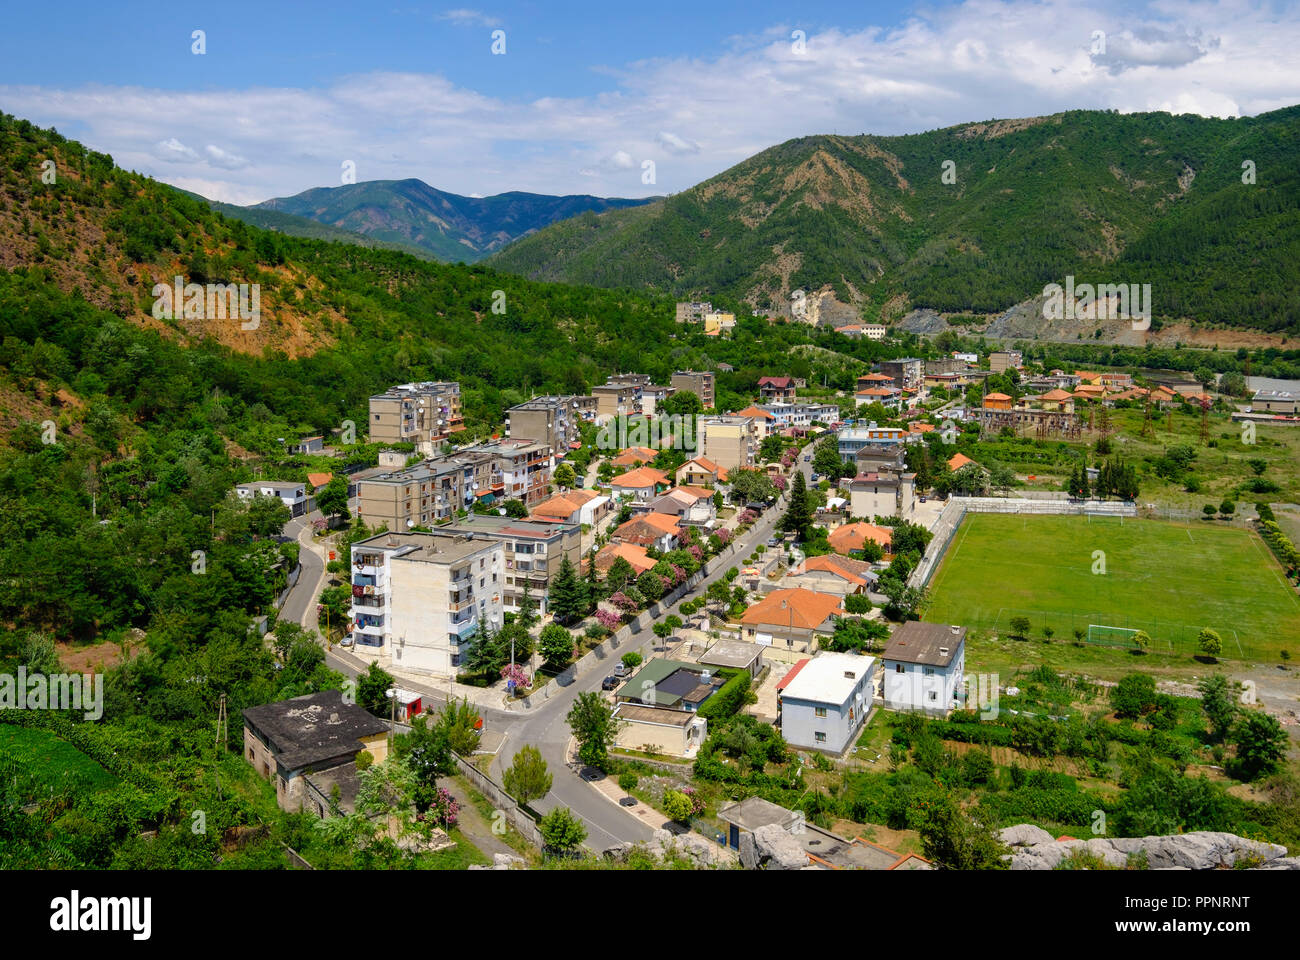 City of Rubik, Mirdita region, Qz Lezha, Albania Stock Photo